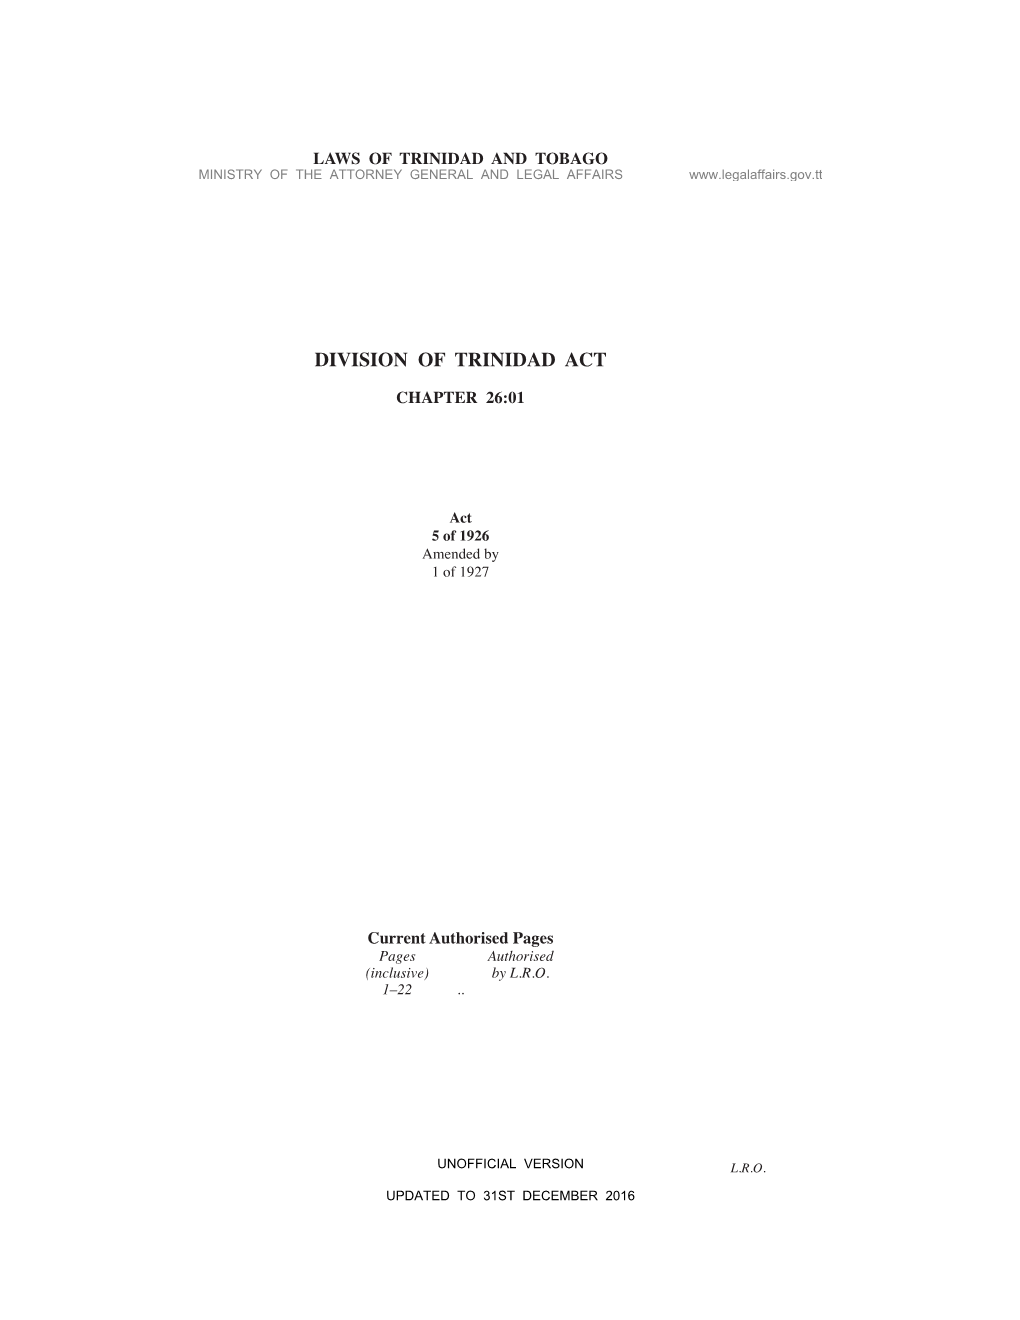 Division of Trinidad Act